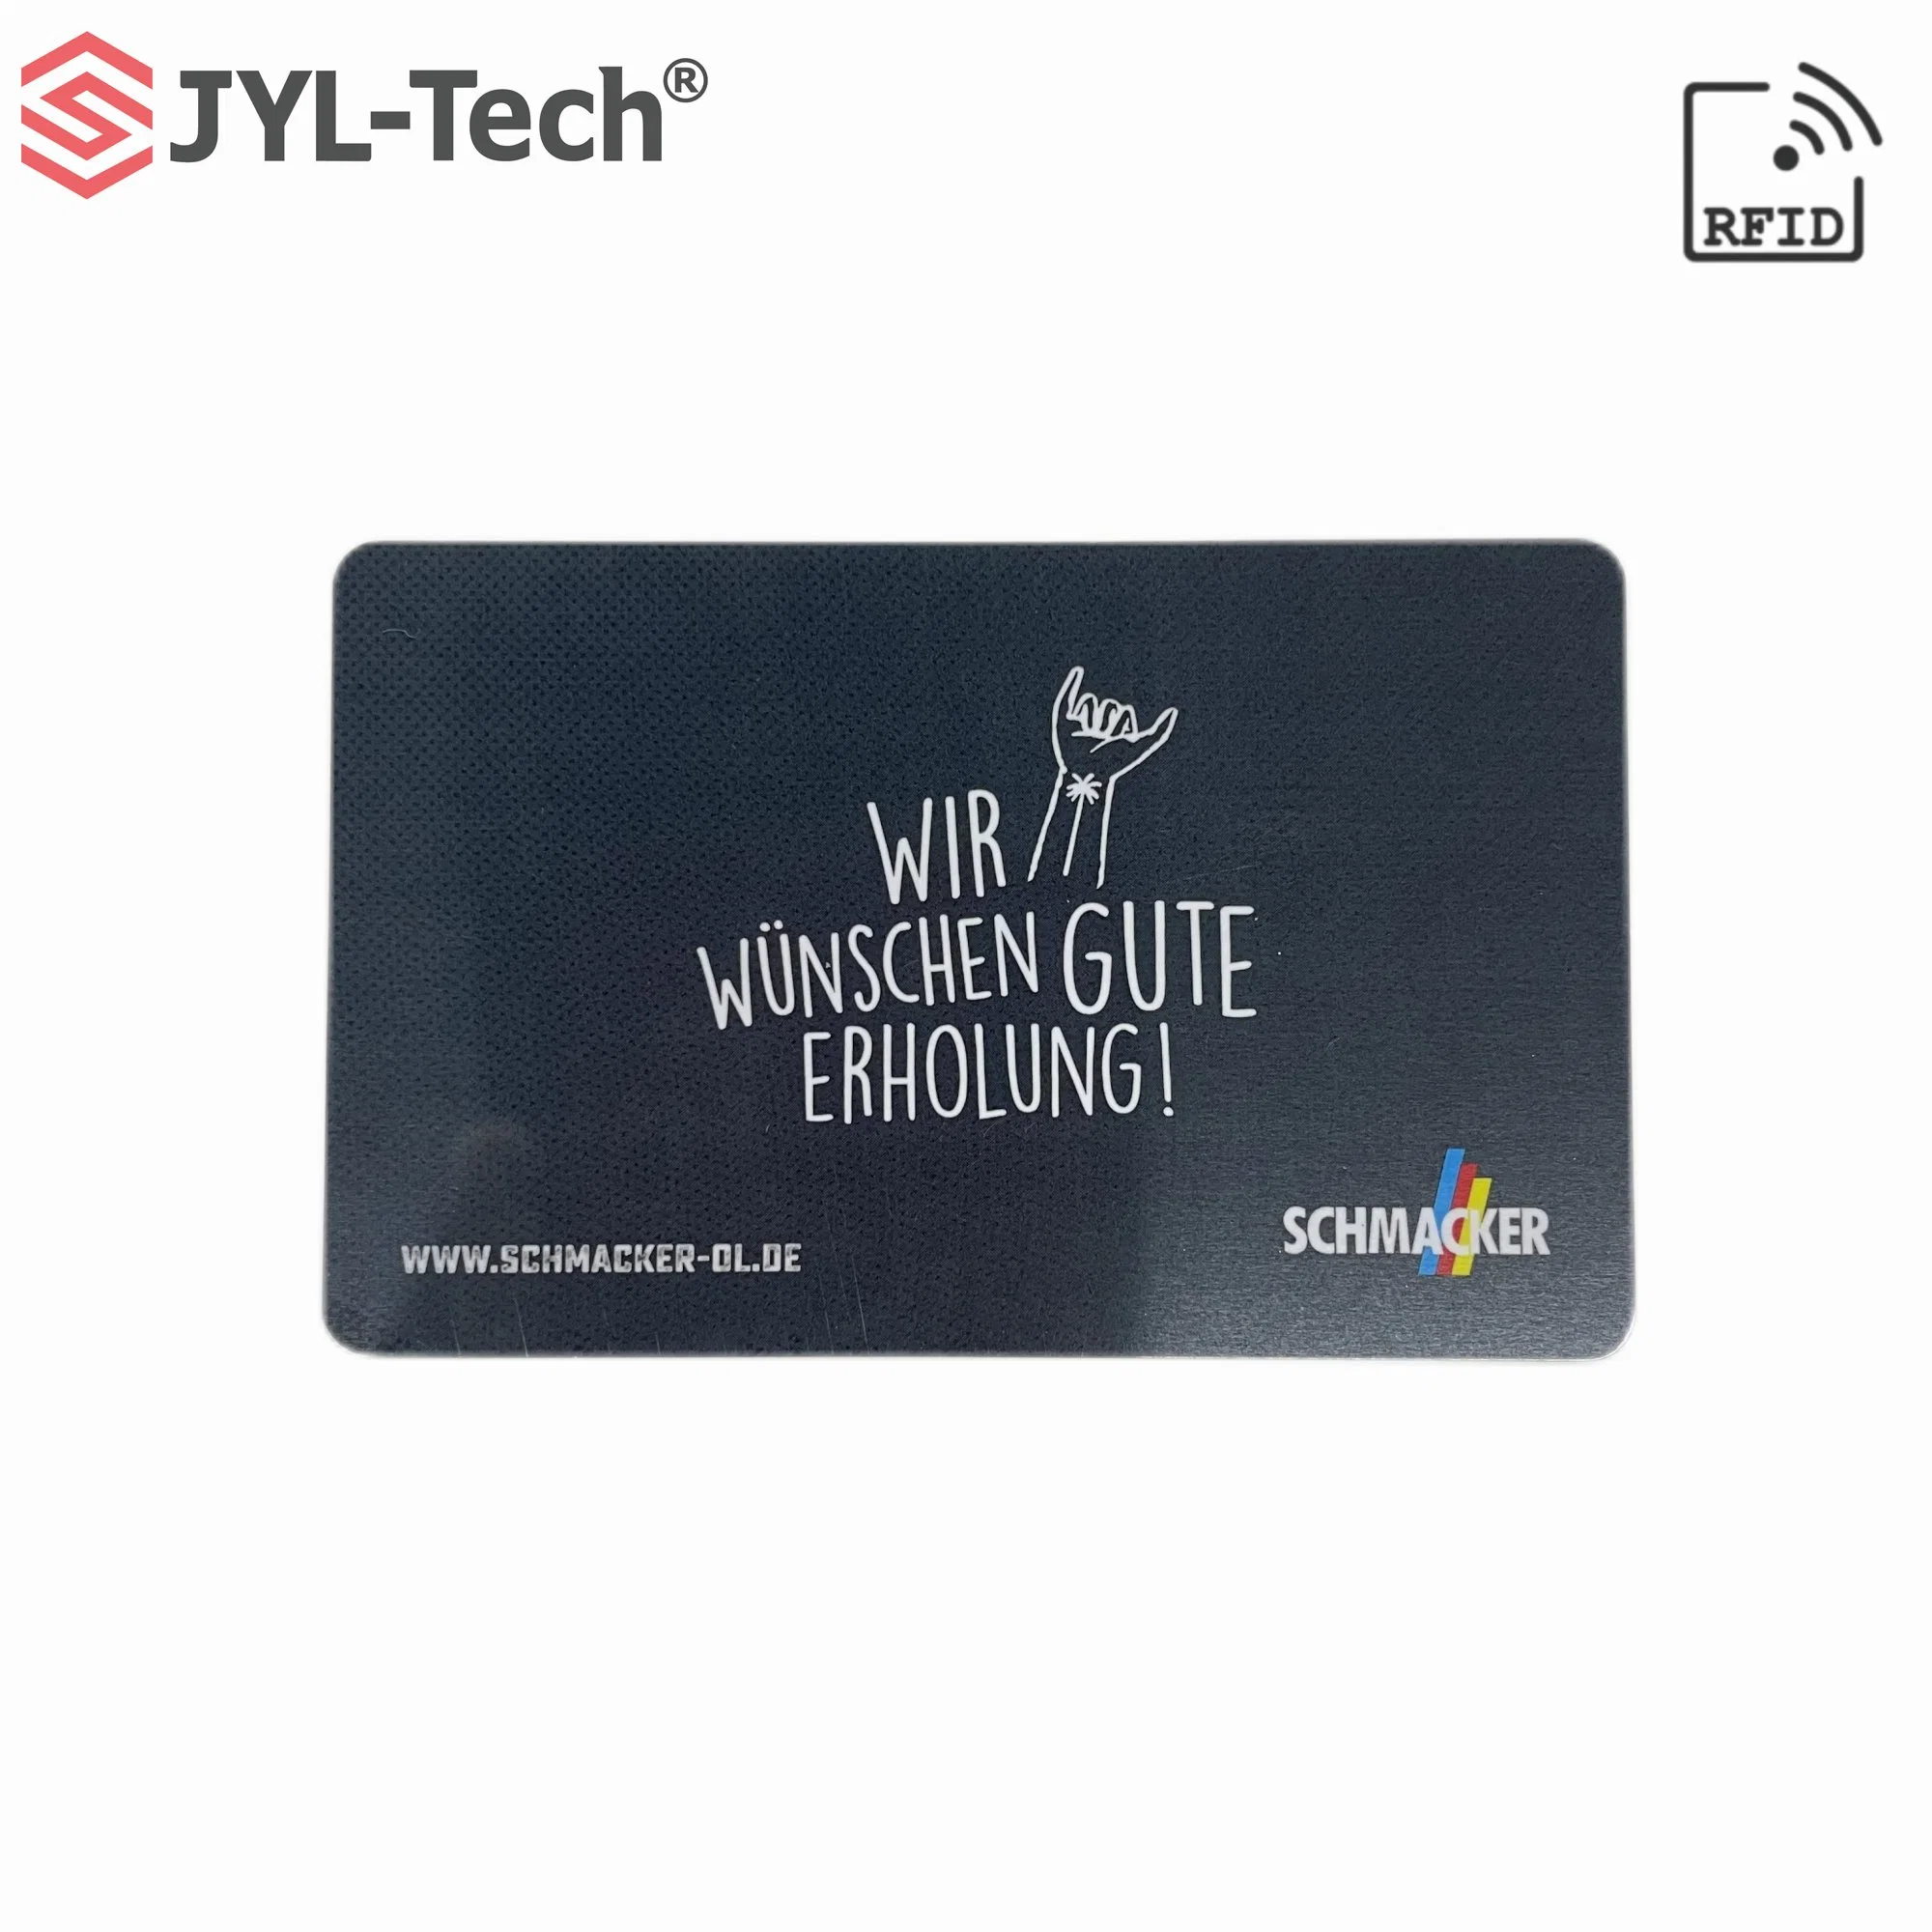 Comercio al por mayor de metal pulido plata personalizada tarjetas RFID Hf Metalic NFC Tarjeta